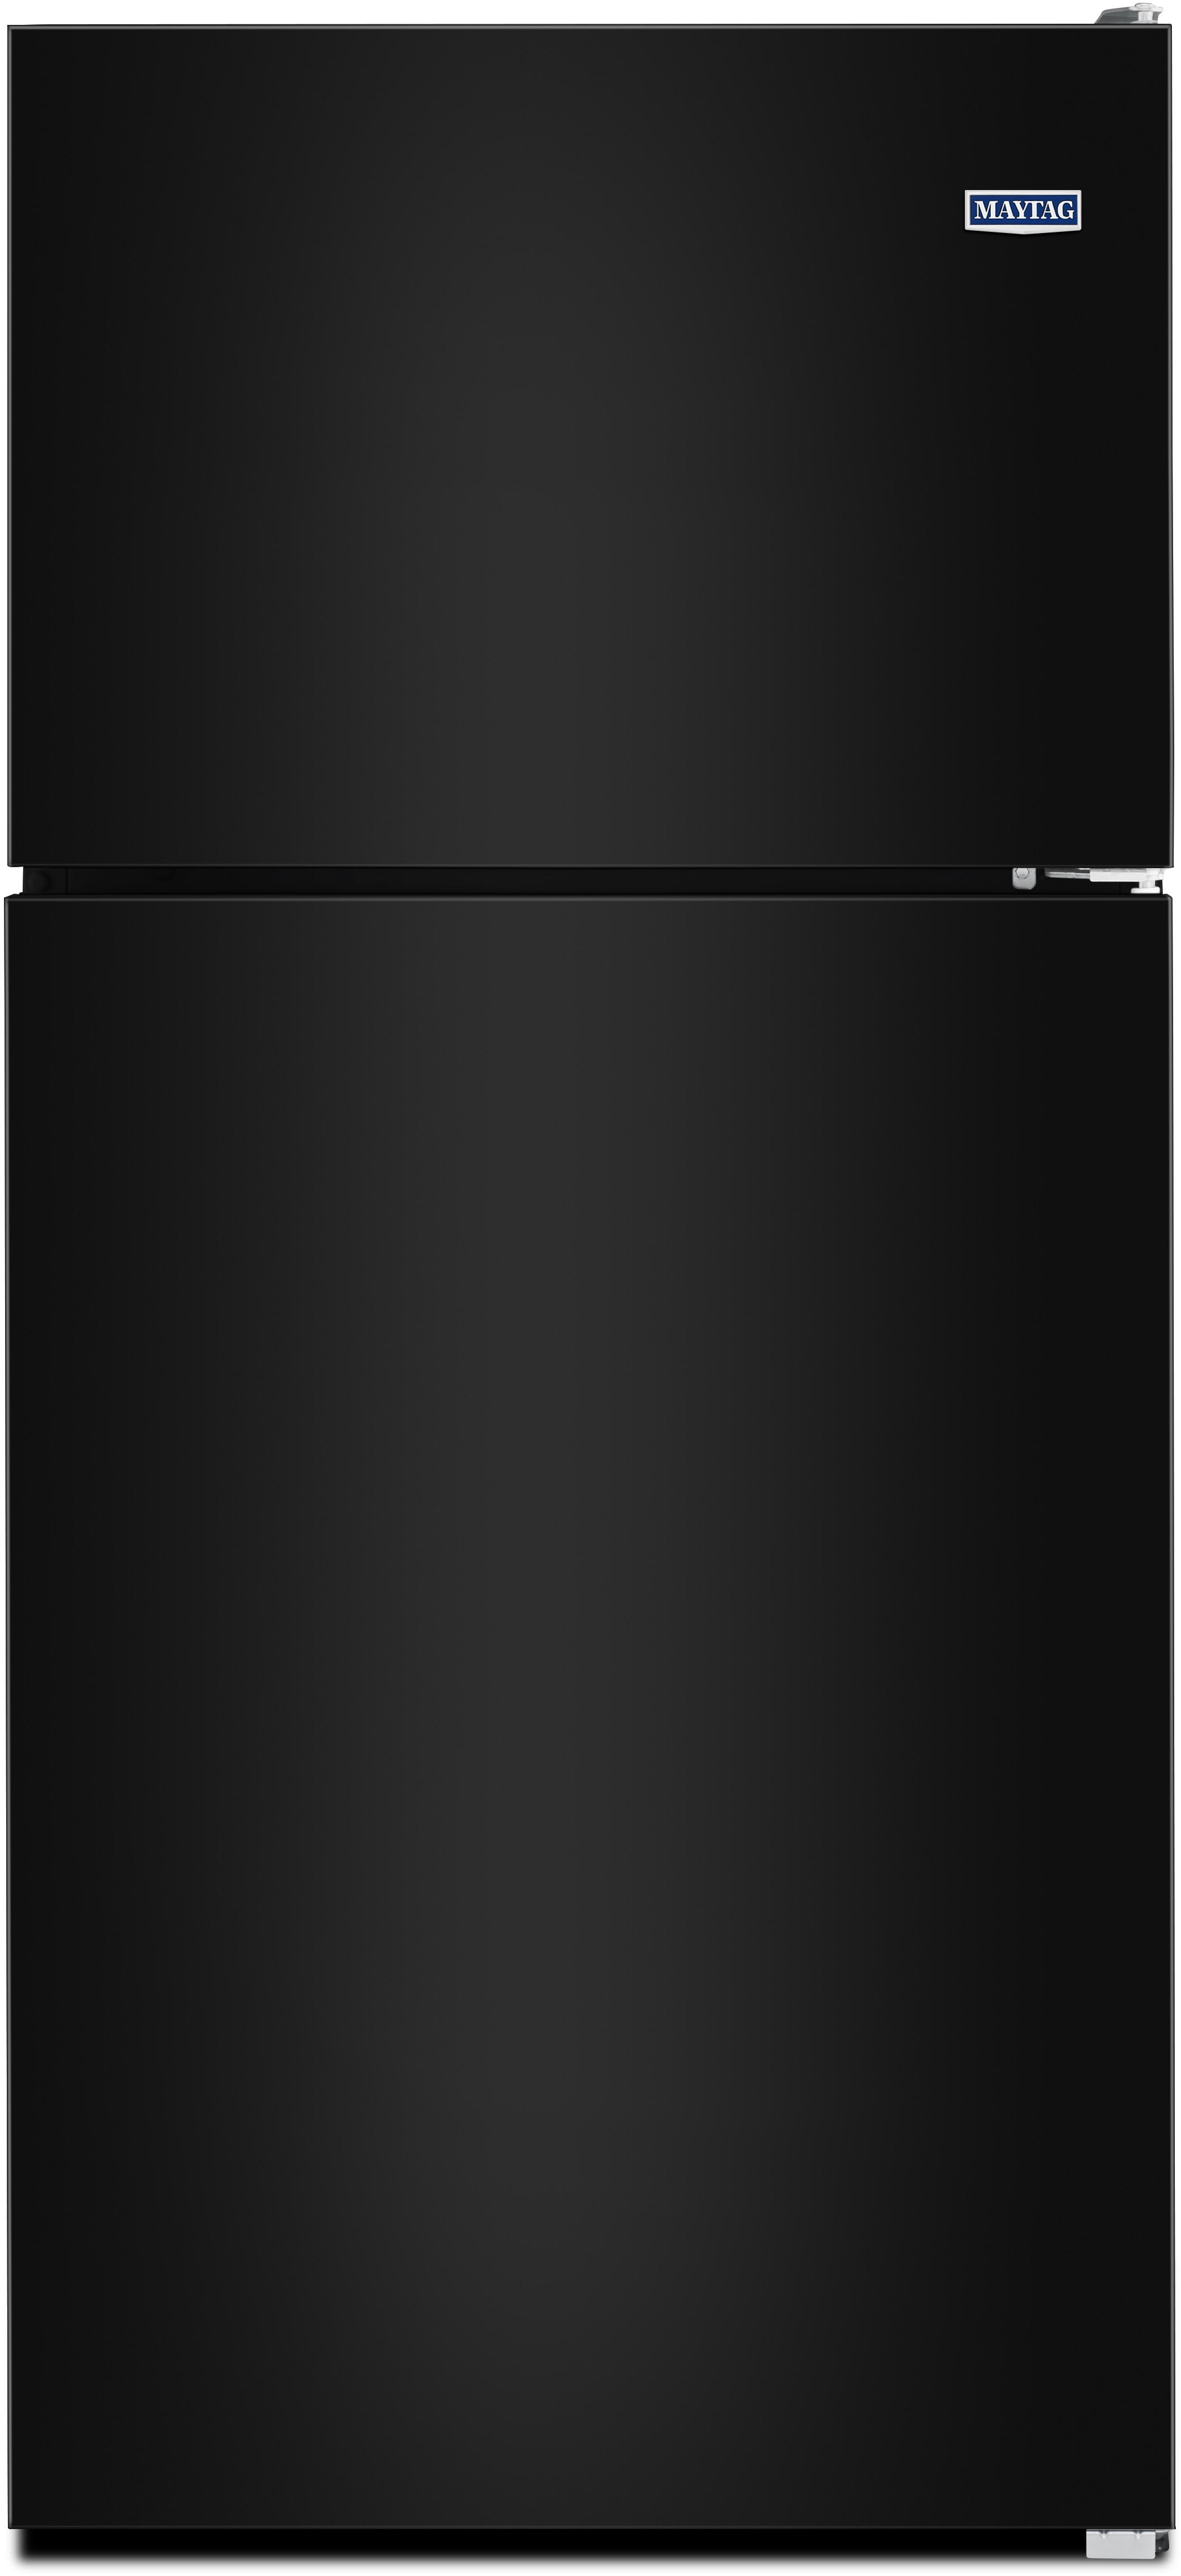 30 Inch Top-Freezer Refrigerator